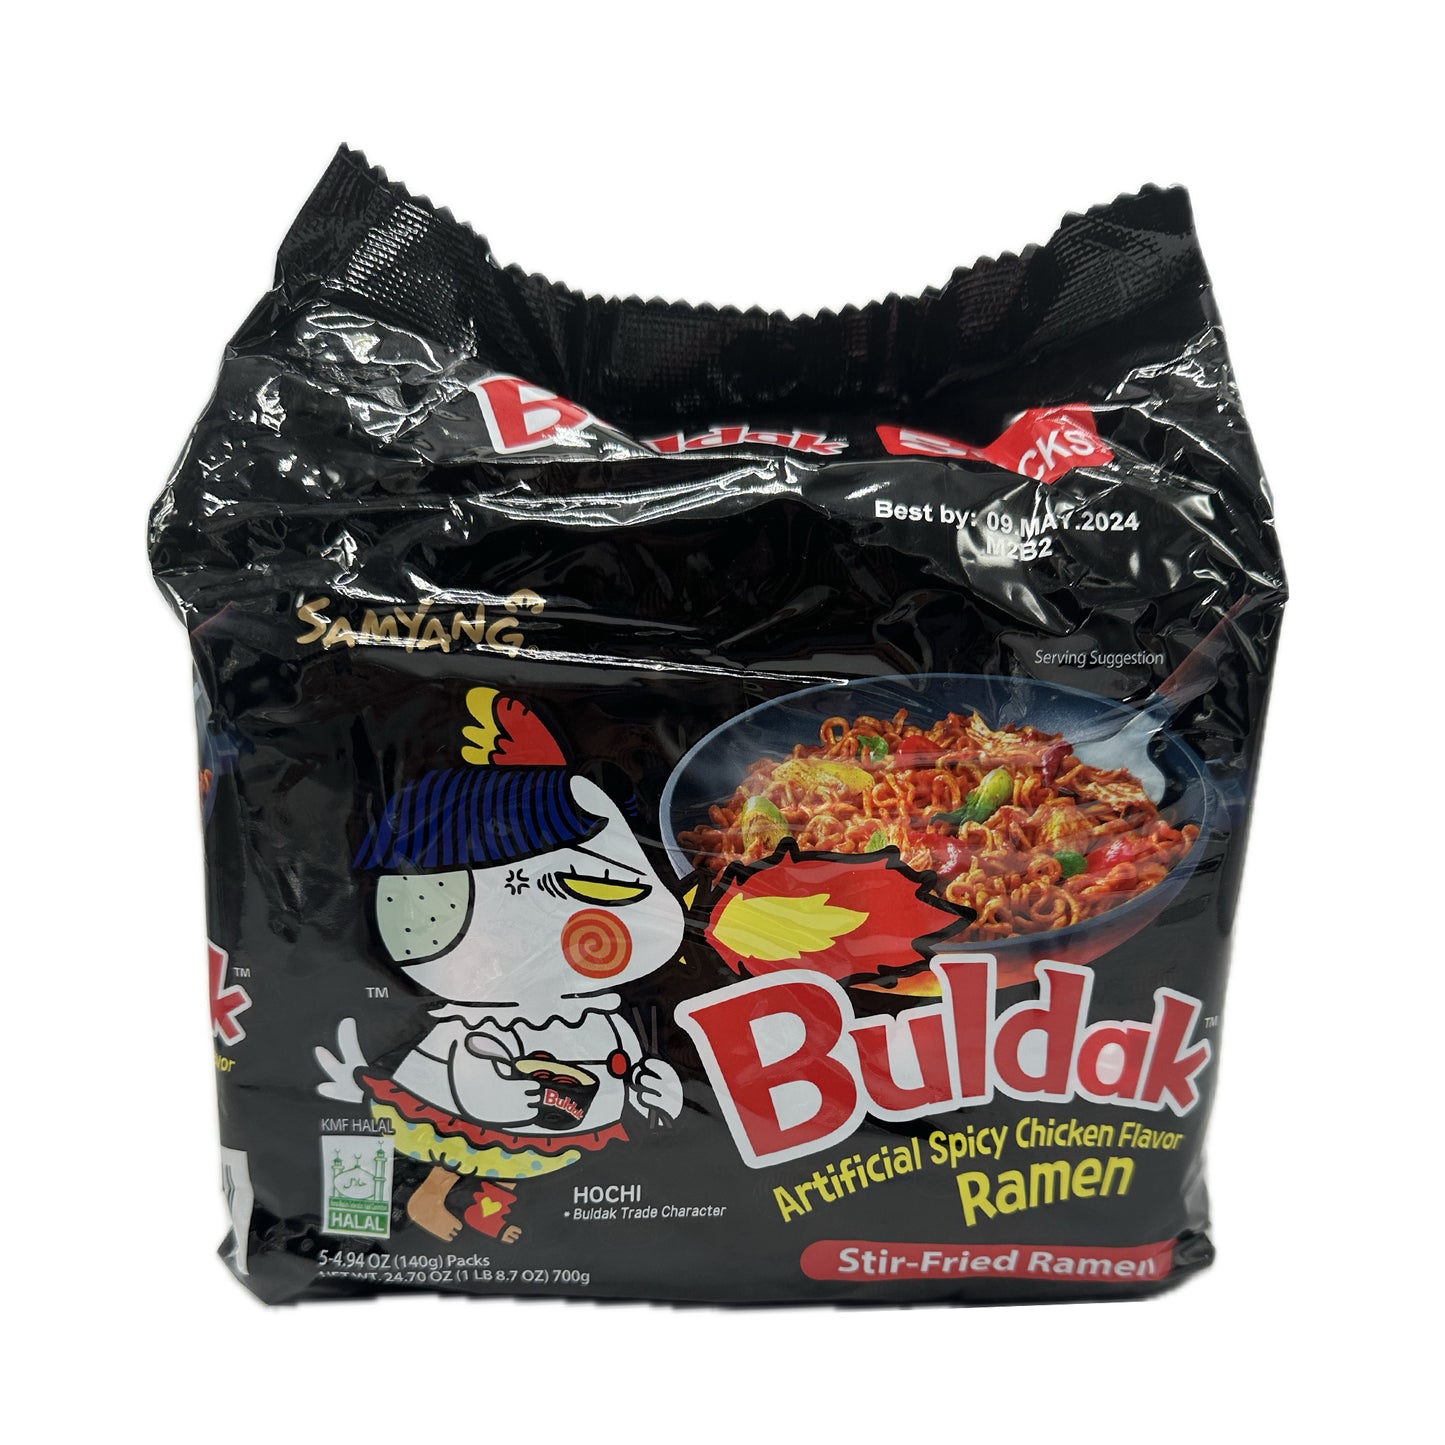 Samyang Buldak Spicy Chicken Flavor Stired- Fired Ramen, 4.94 oz (Pack of 5)